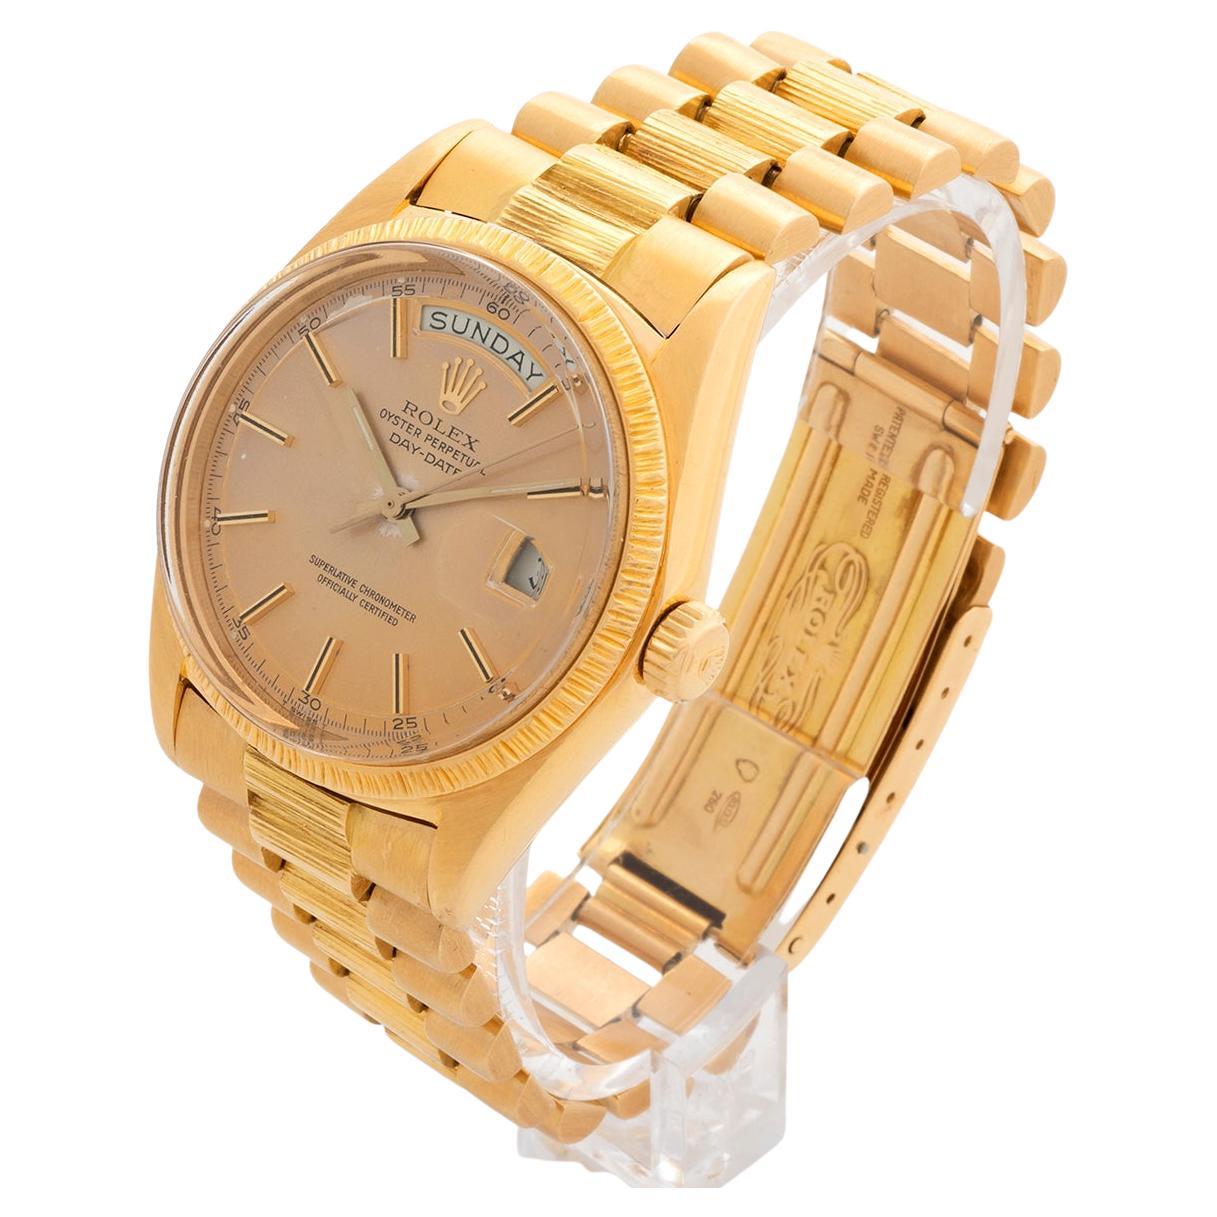 Vintage Rolex Day Date 1807 Wristwatch, Yellow Gold Case, Bark Bezel, Swiss Dial